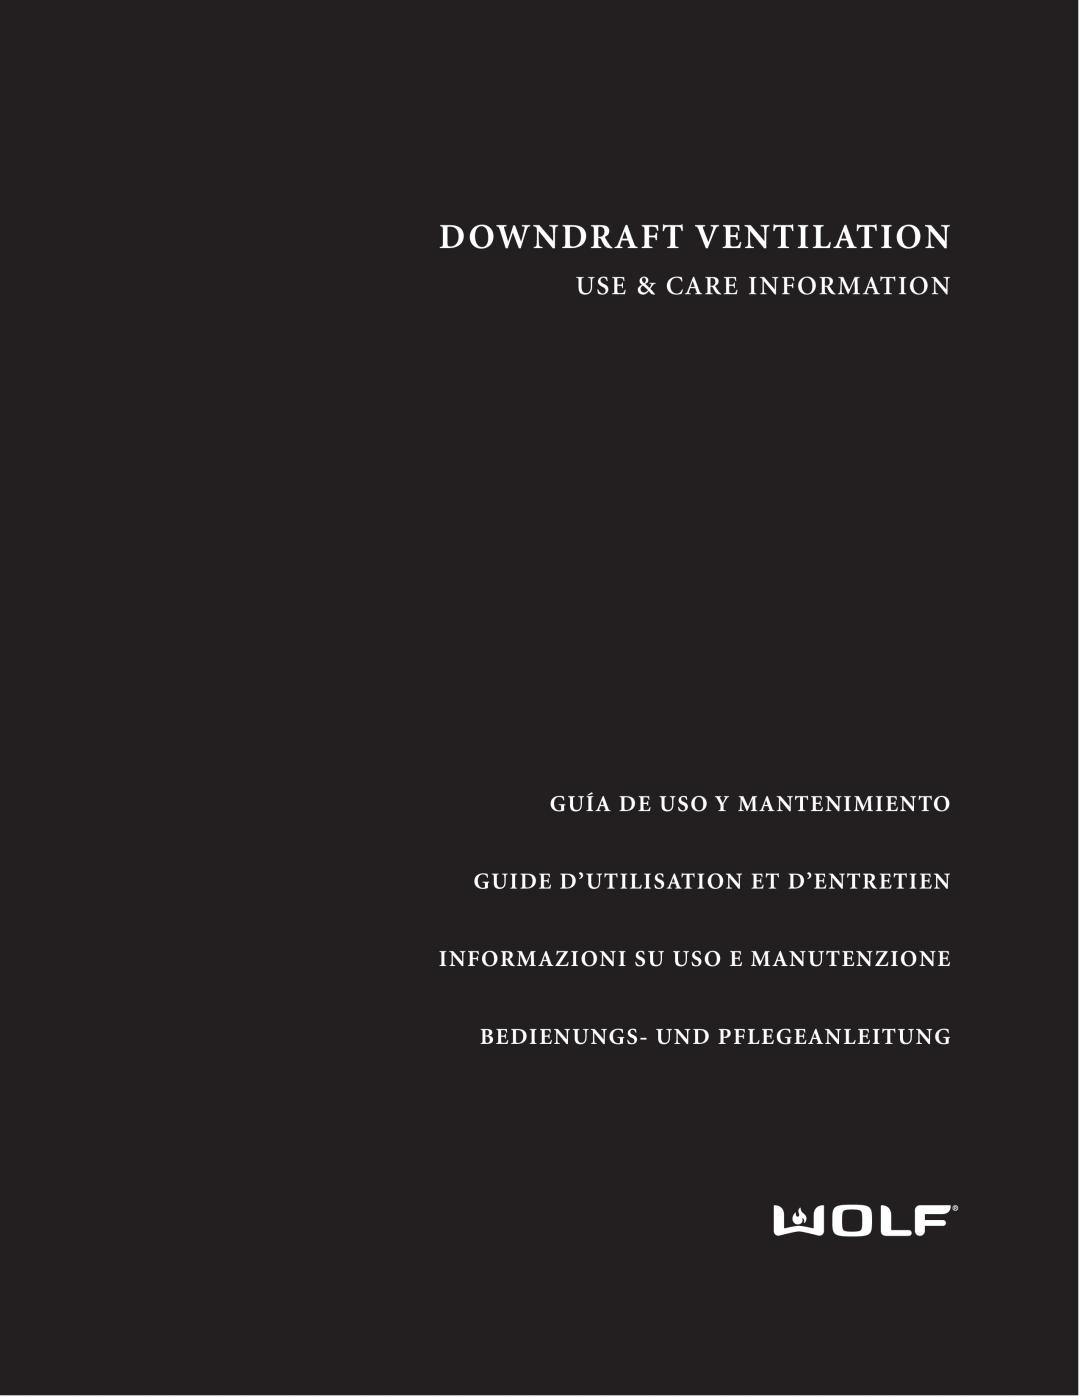 Sub-Zero Downdraft Ventilation manual Use & Care Information 